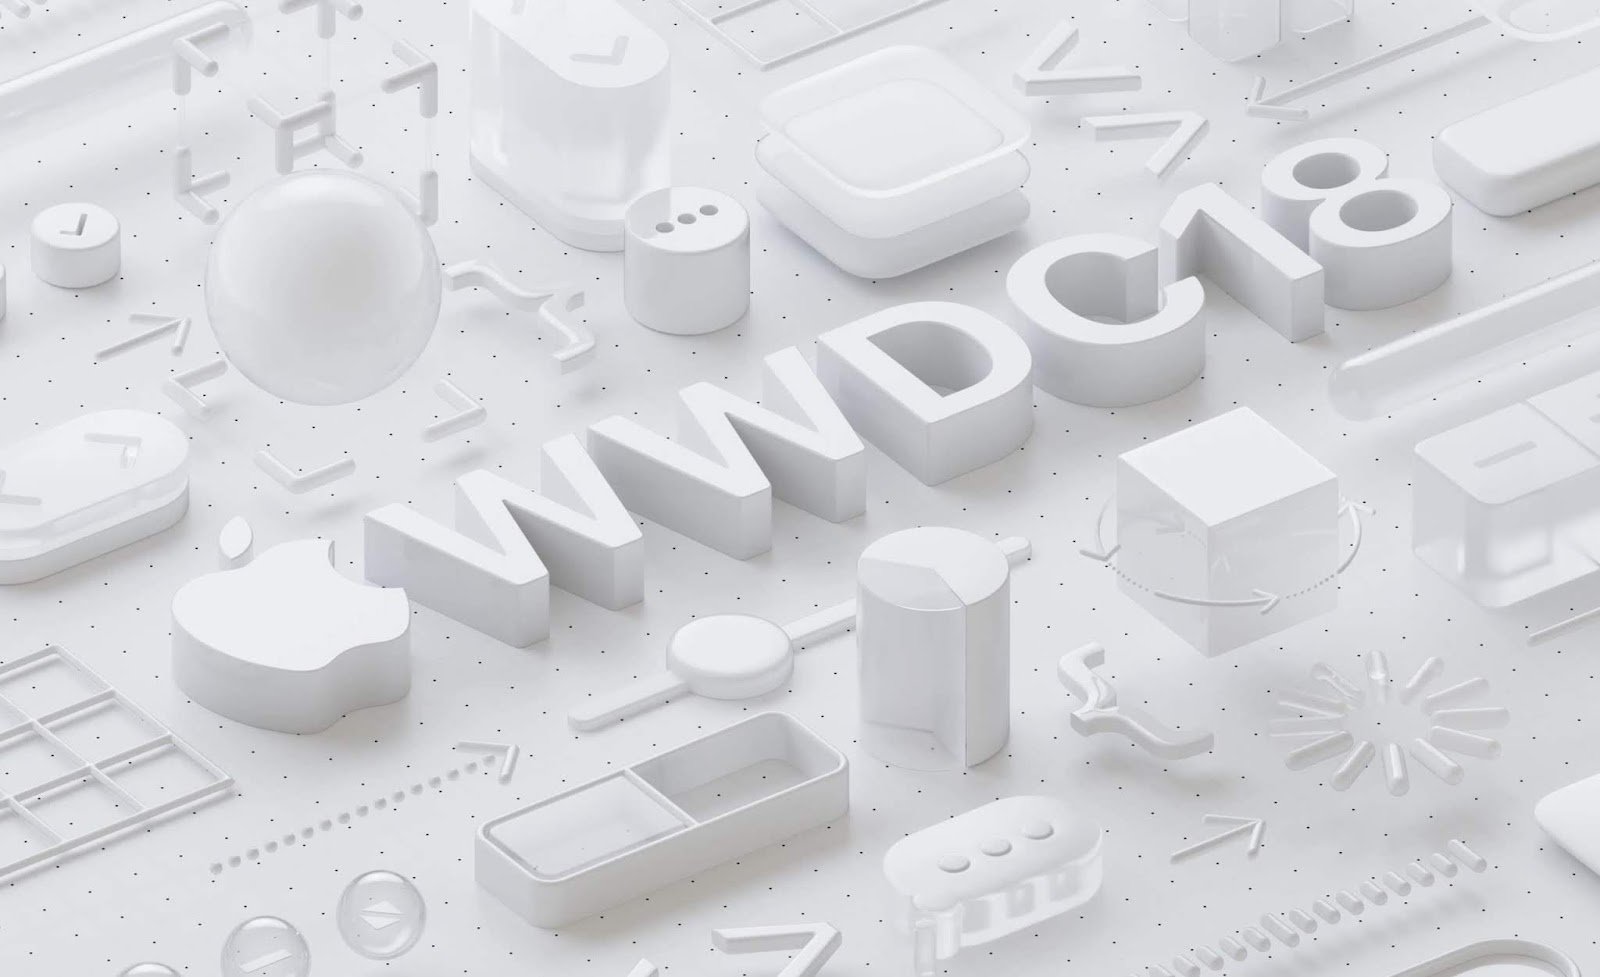 Apple Sends the Press Invitations for WWDC 2018